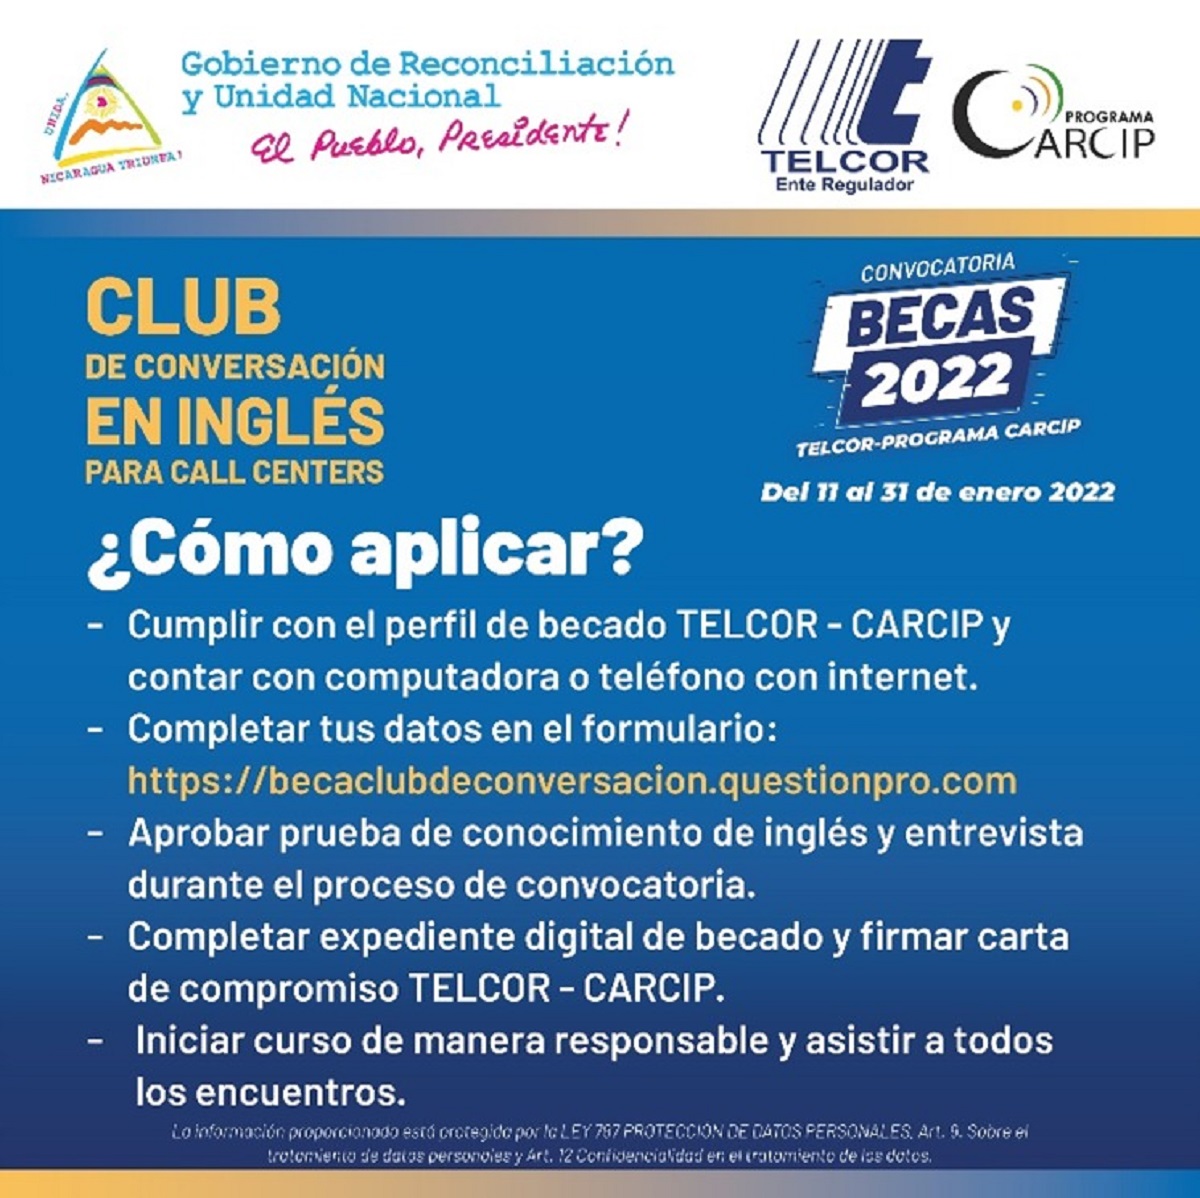 Gobierno de nicaragua ofrece 400 becas para cursos en linea de ingles